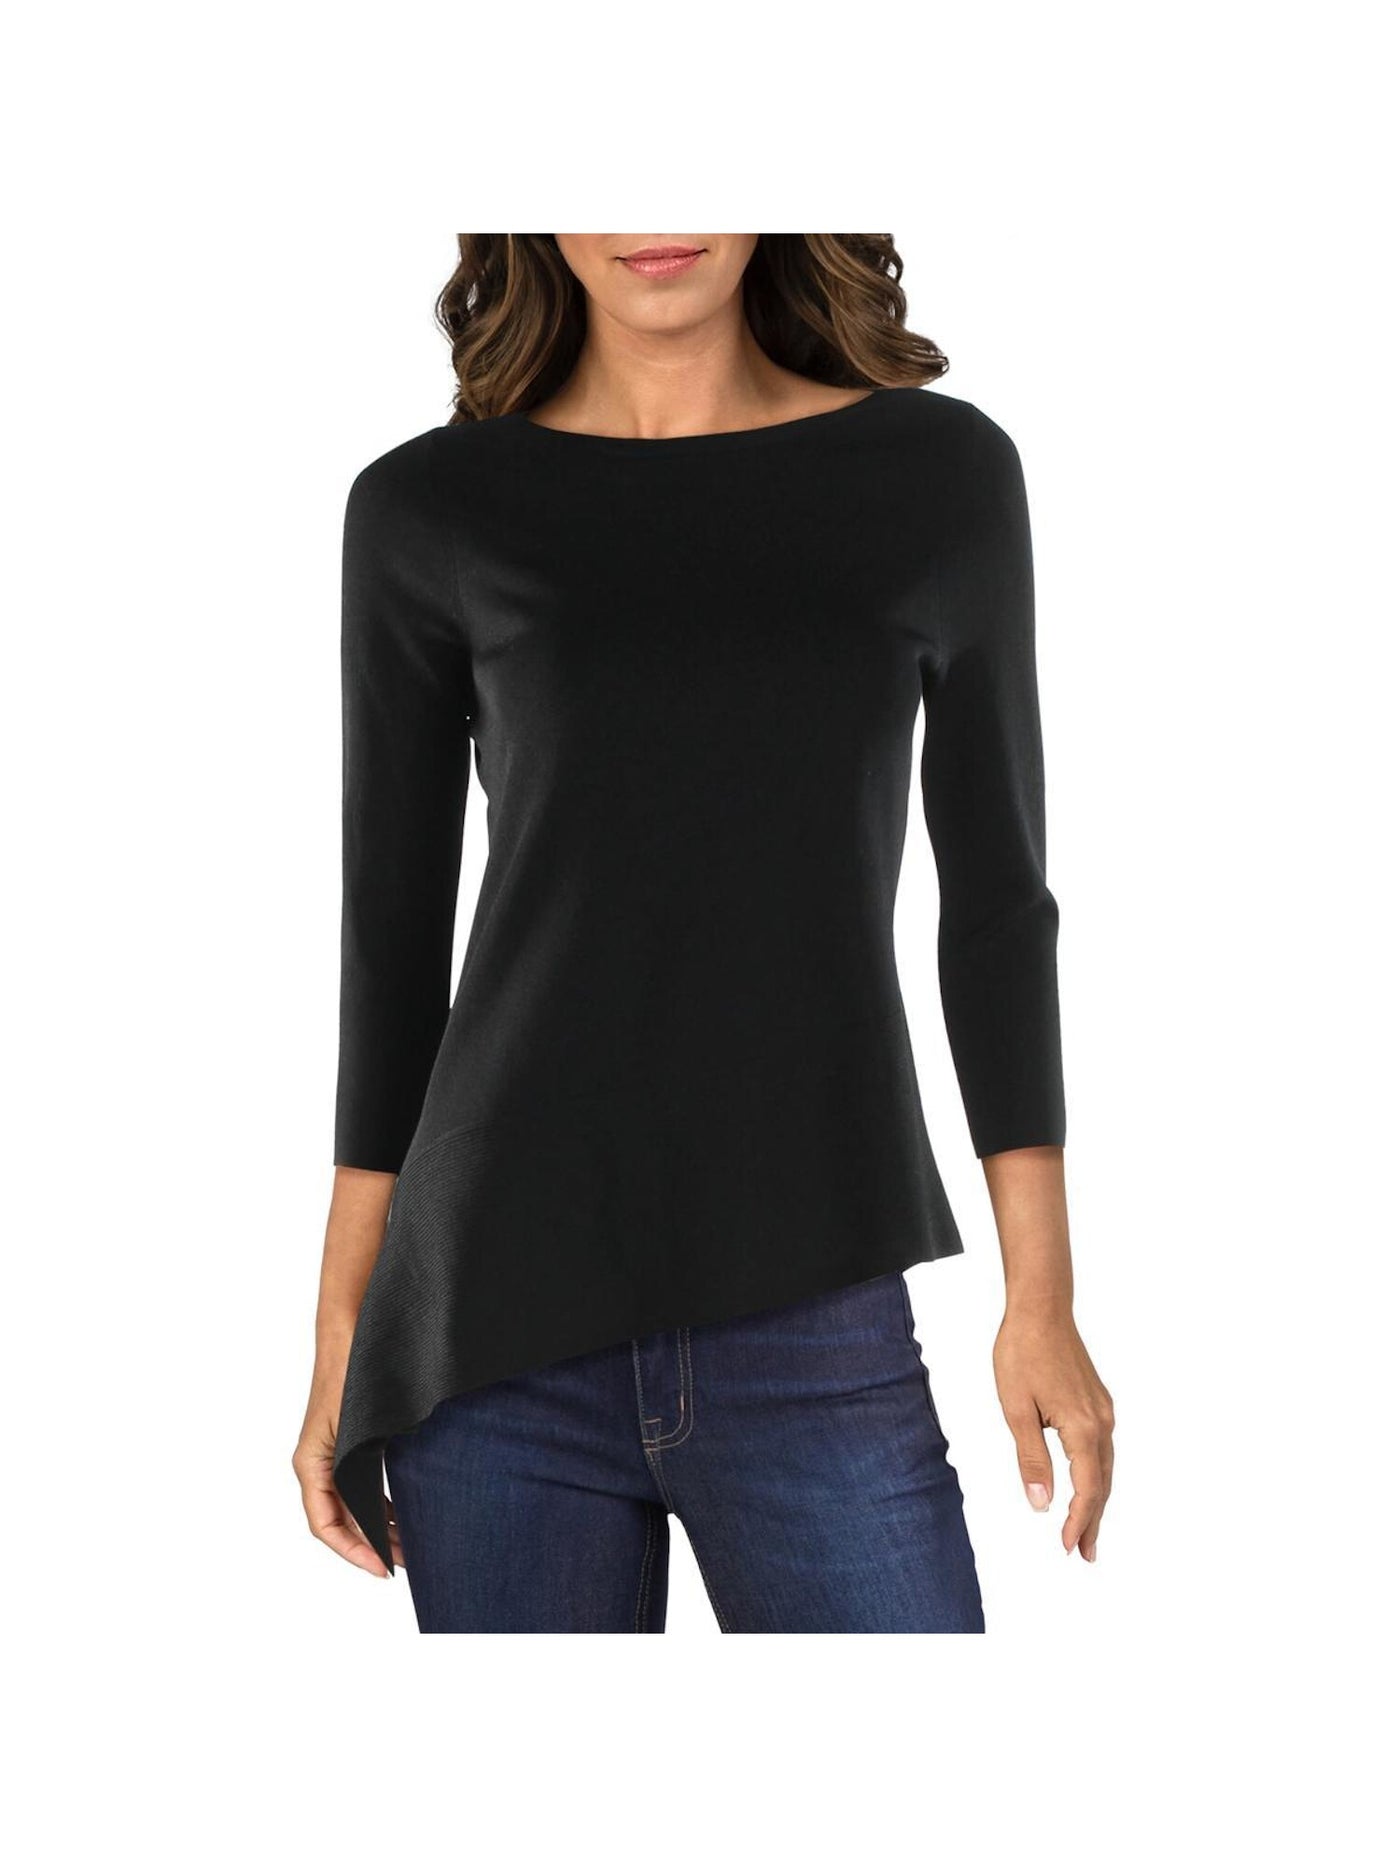 ANNE KLEIN Womens Black 3/4 Sleeve Jewel Neck Sweater XS